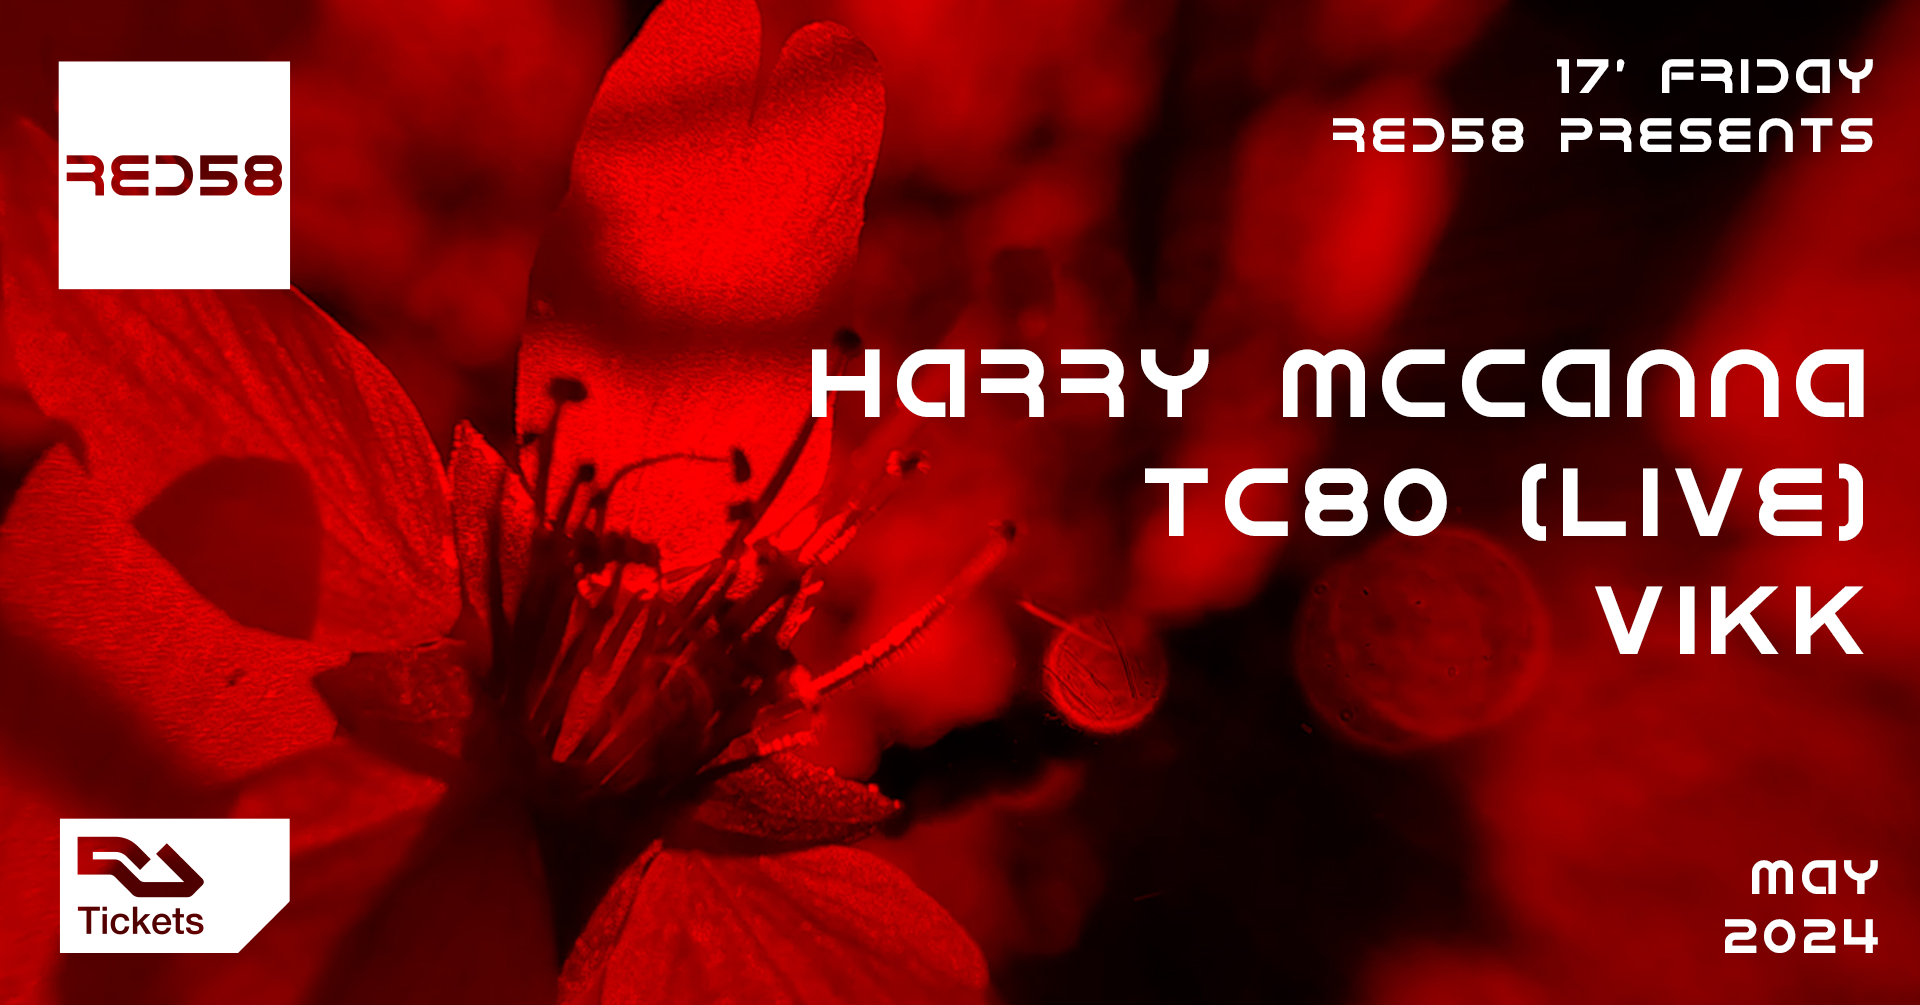 RED58 presents Harry McCanna, TC80 (LIVE) & VIKk - フライヤー表